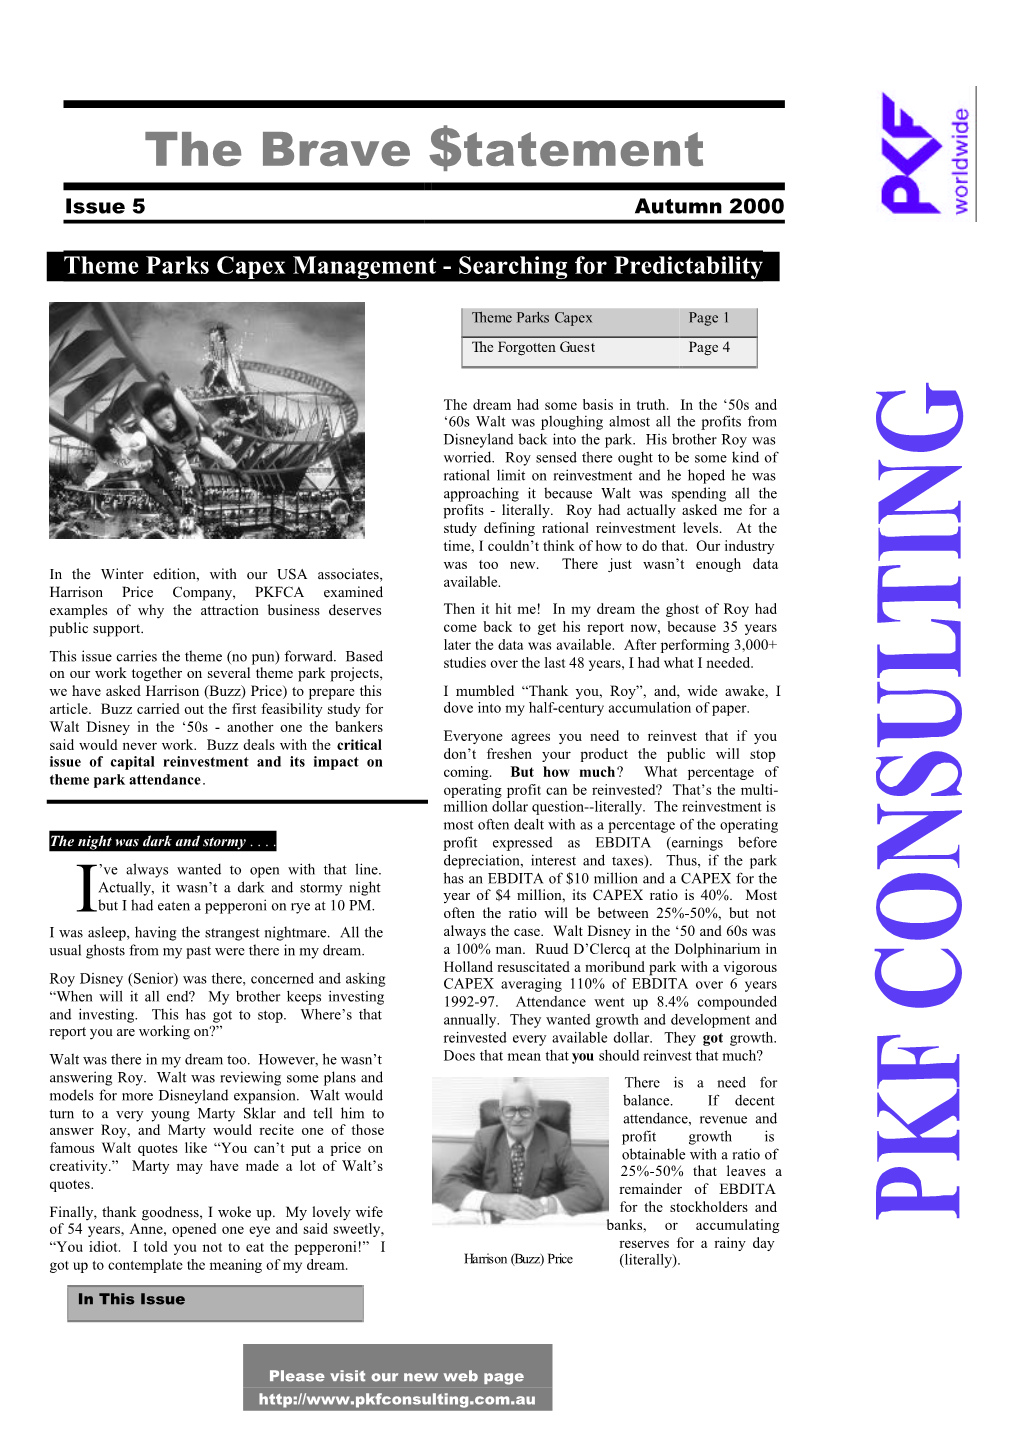 The Brave $Tatement Issue 5 Autumn 2000